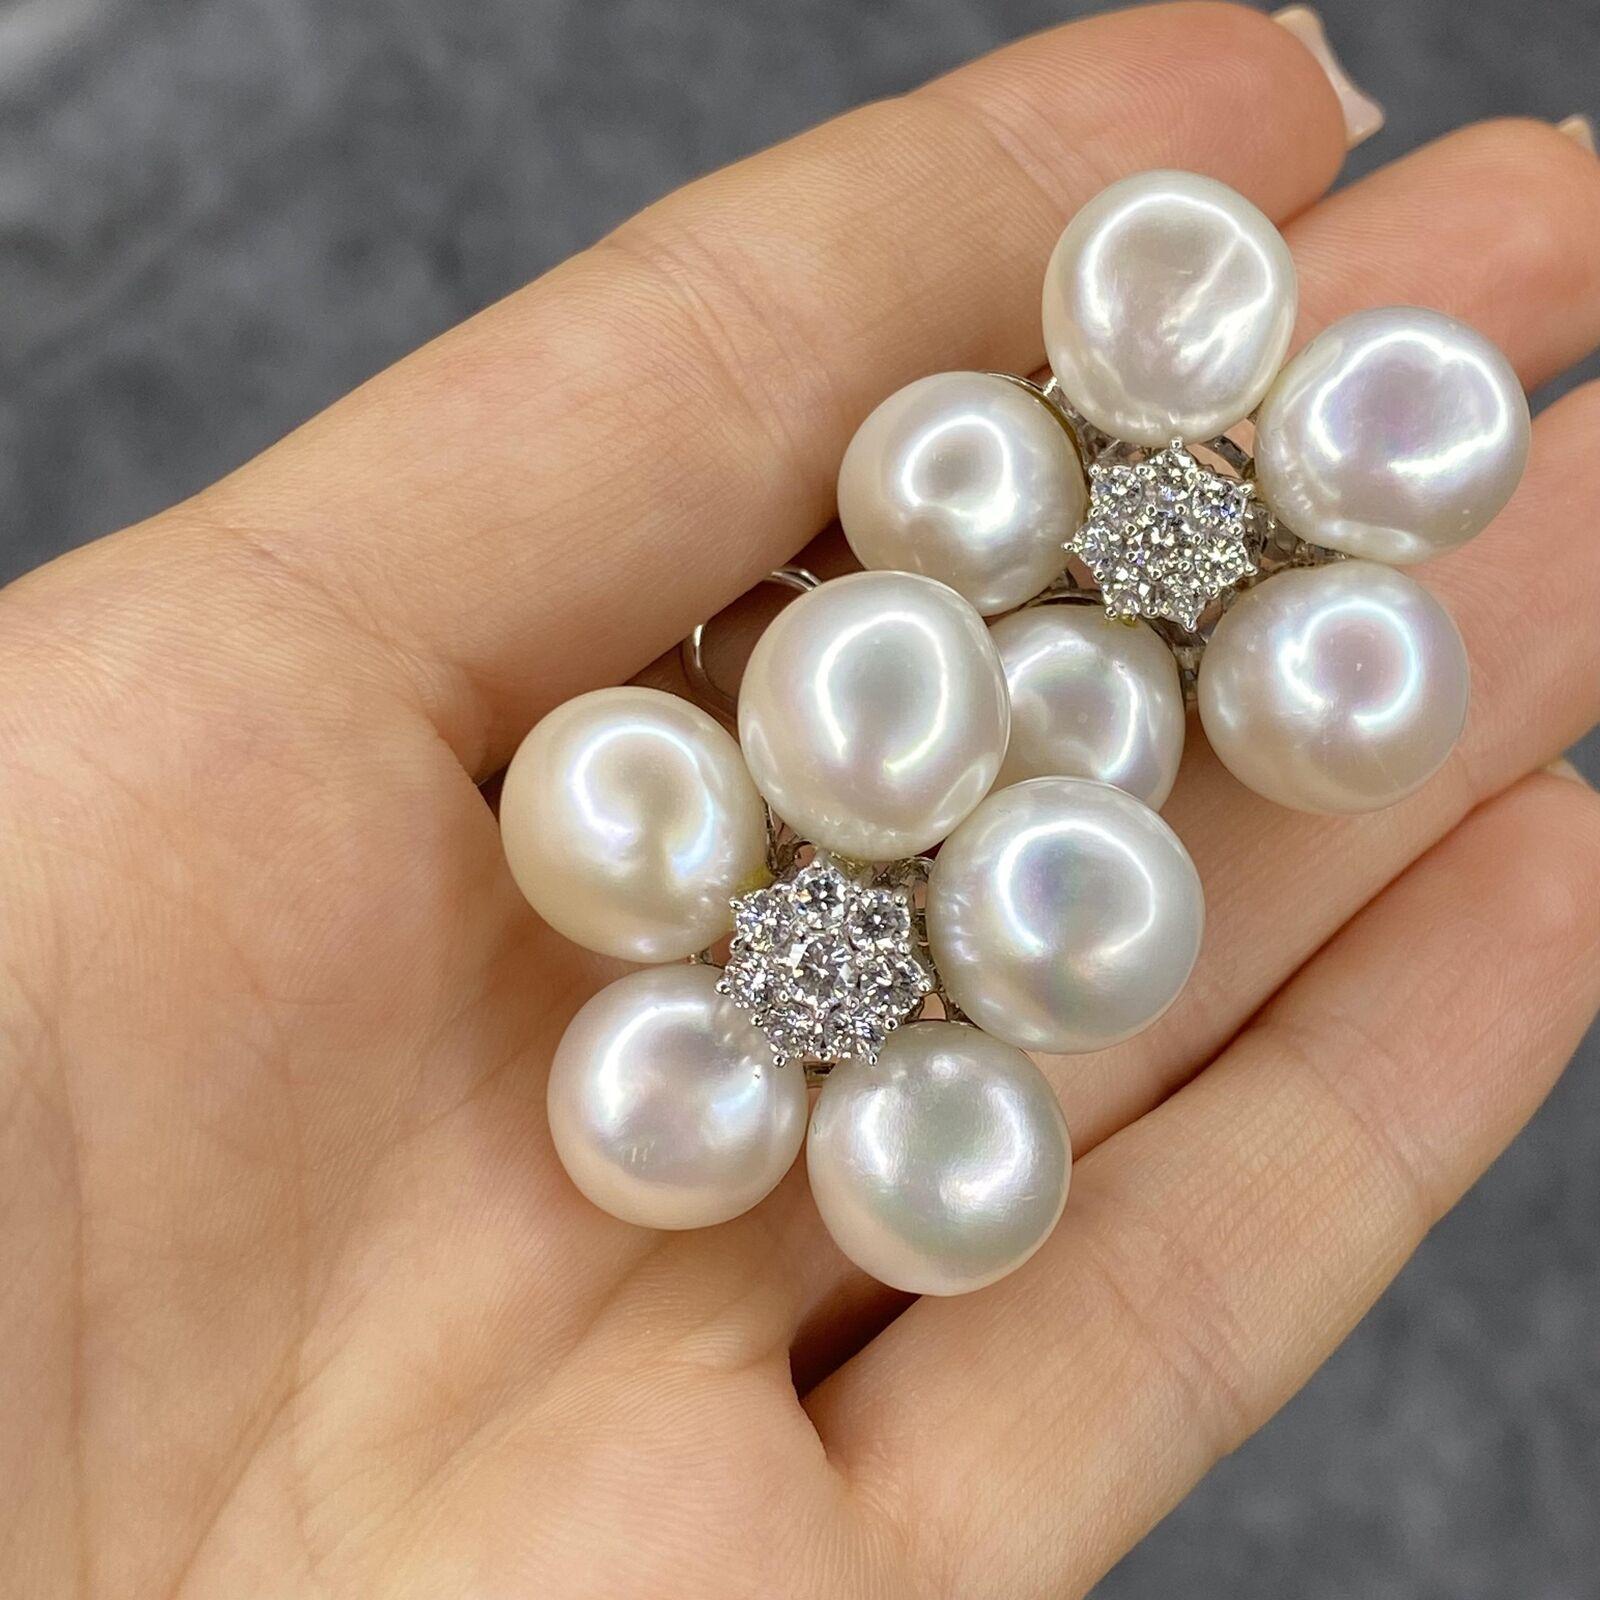 Vintage Diamond & Pearl Flower Huggies Earrings in 18K White Gold
Specifications:

Metal: 18K (Au 70-75%)

Weight: 16.8 Gr

Main Stone: Diamonds 0.90CTW GH SI

Side stones: Pearls
 

